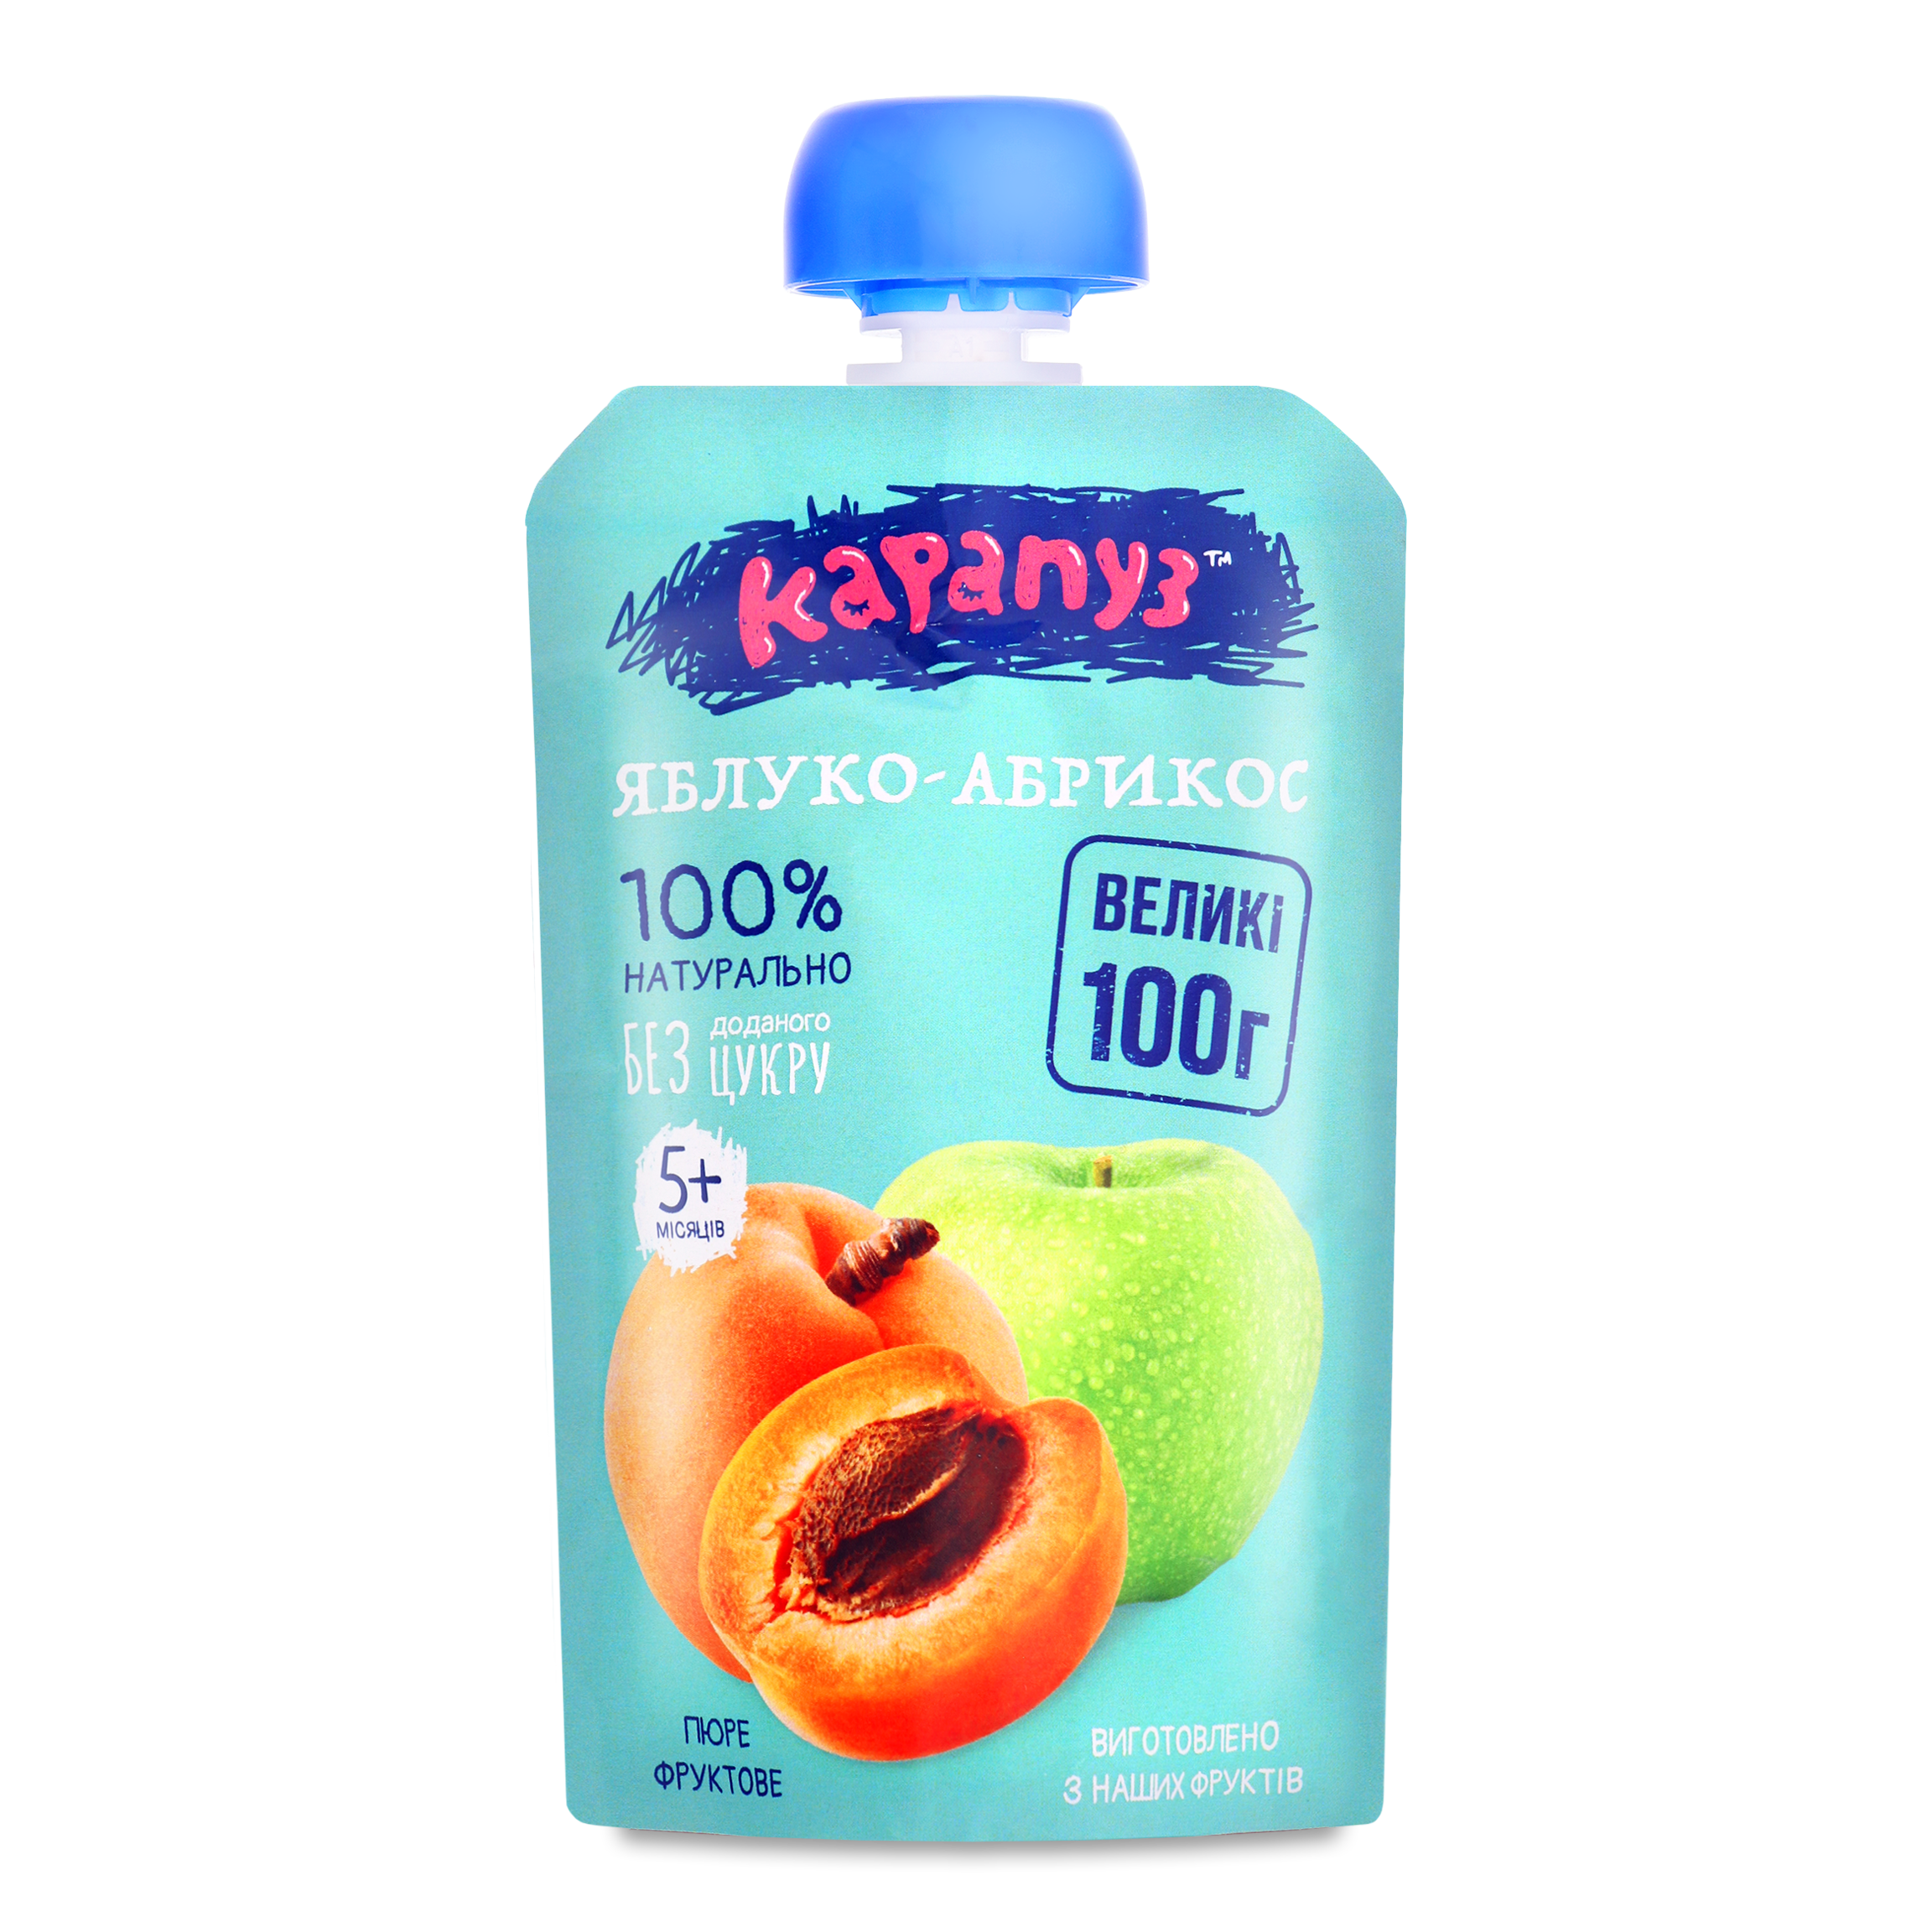 Karapuz Apple-apricot Puree for Children from 5 Months 100g